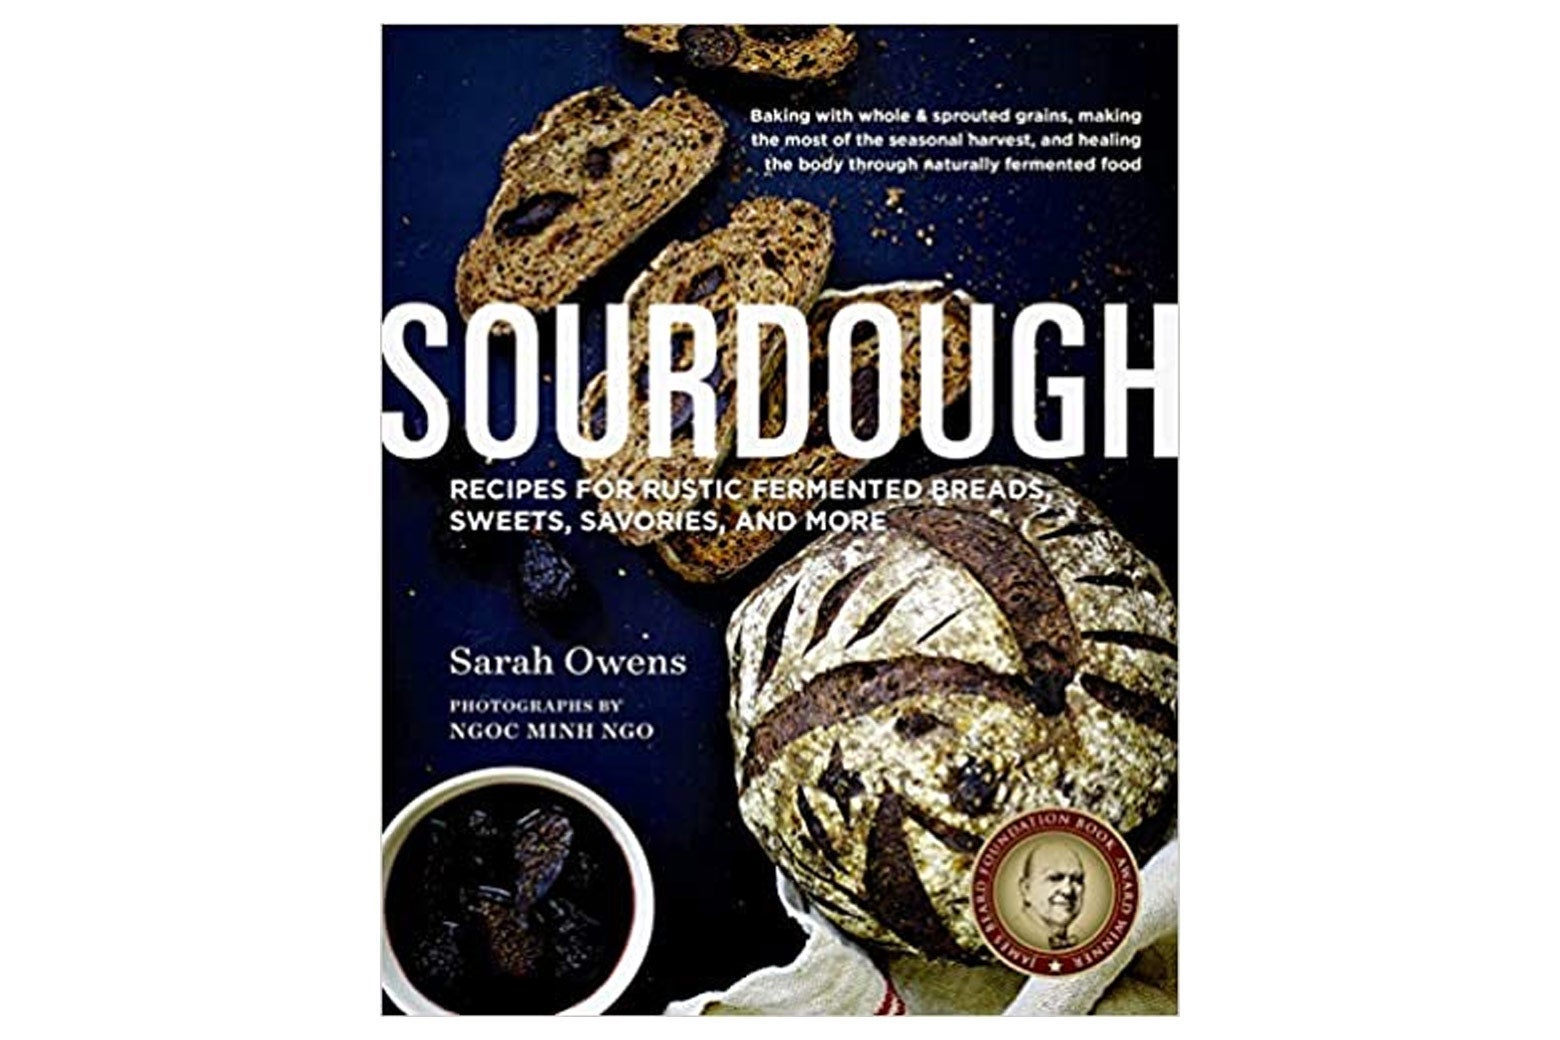 Book cover of Sourdough.